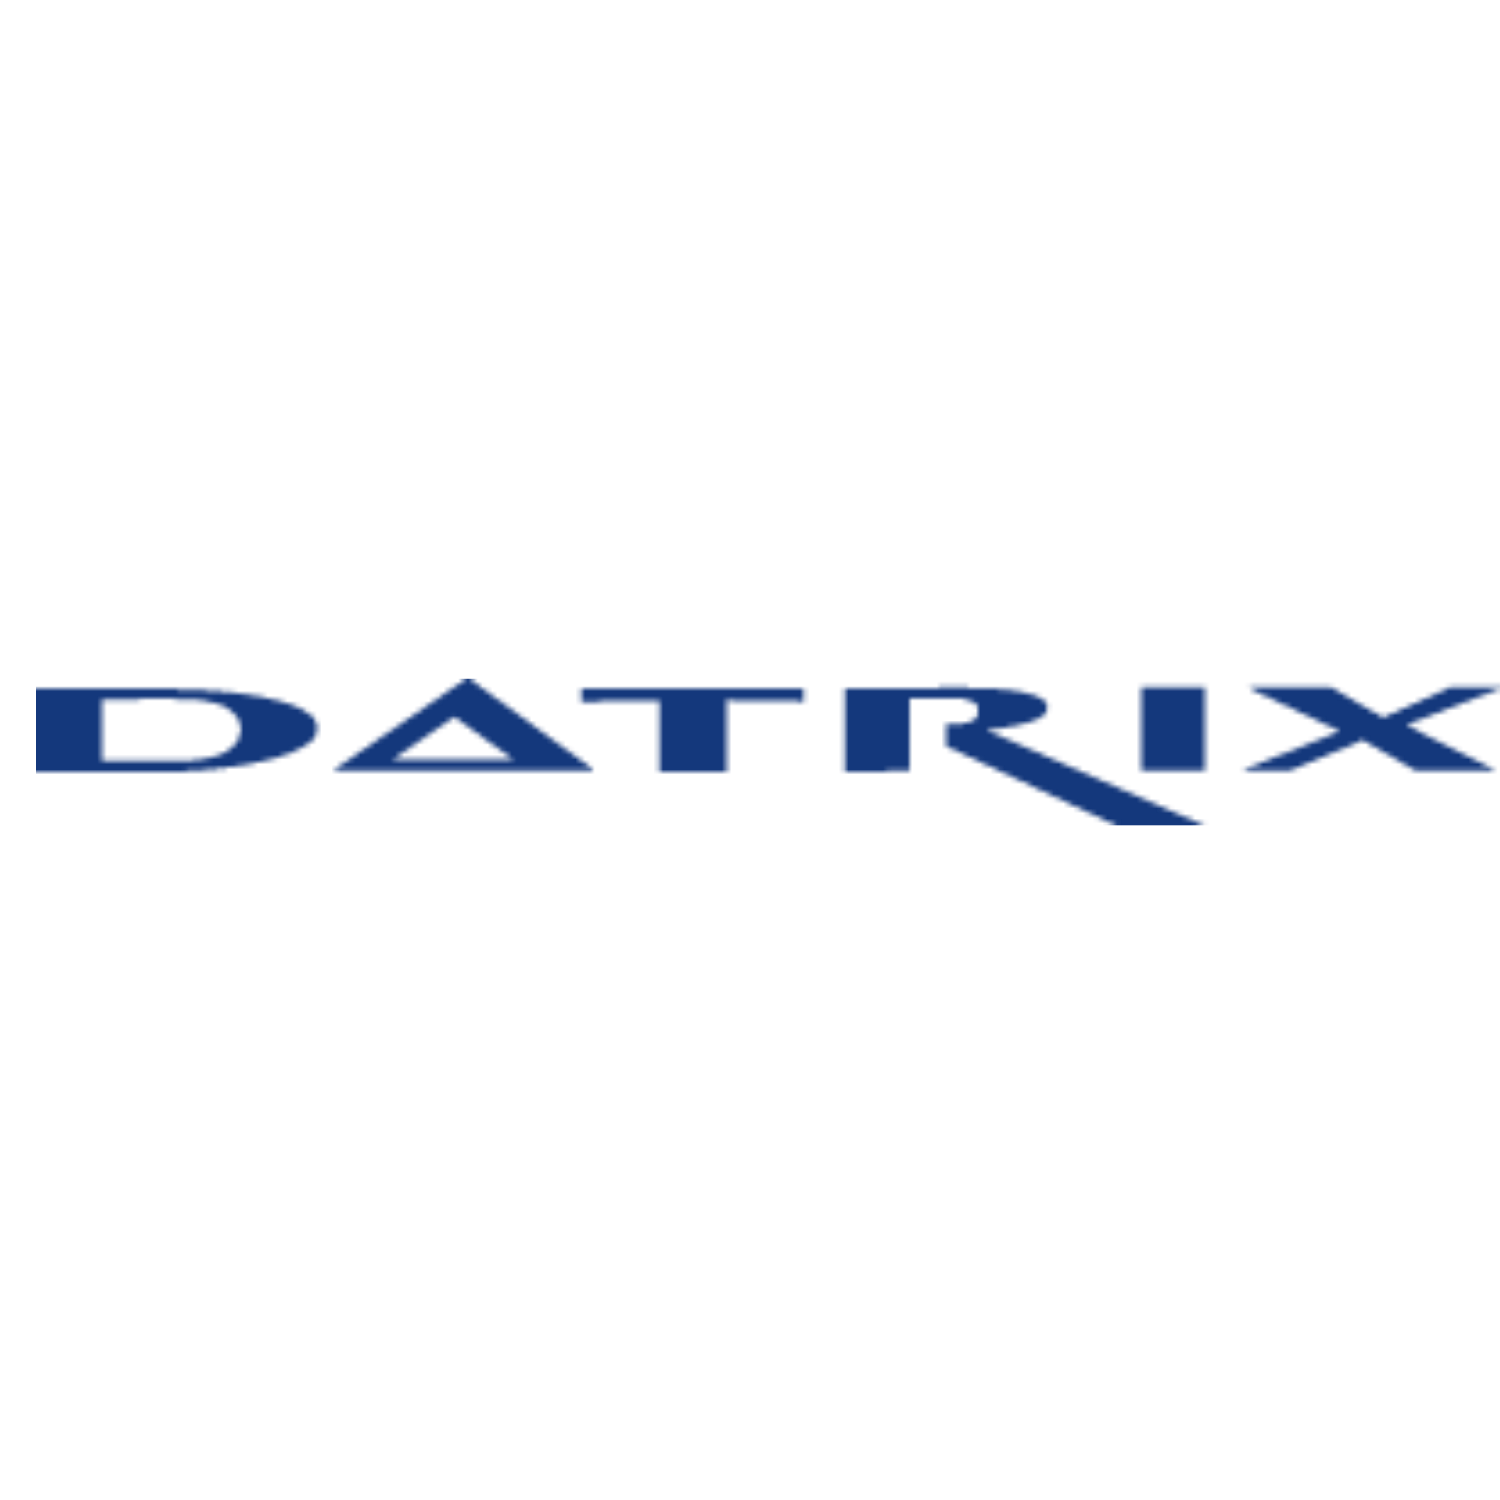 Datrix